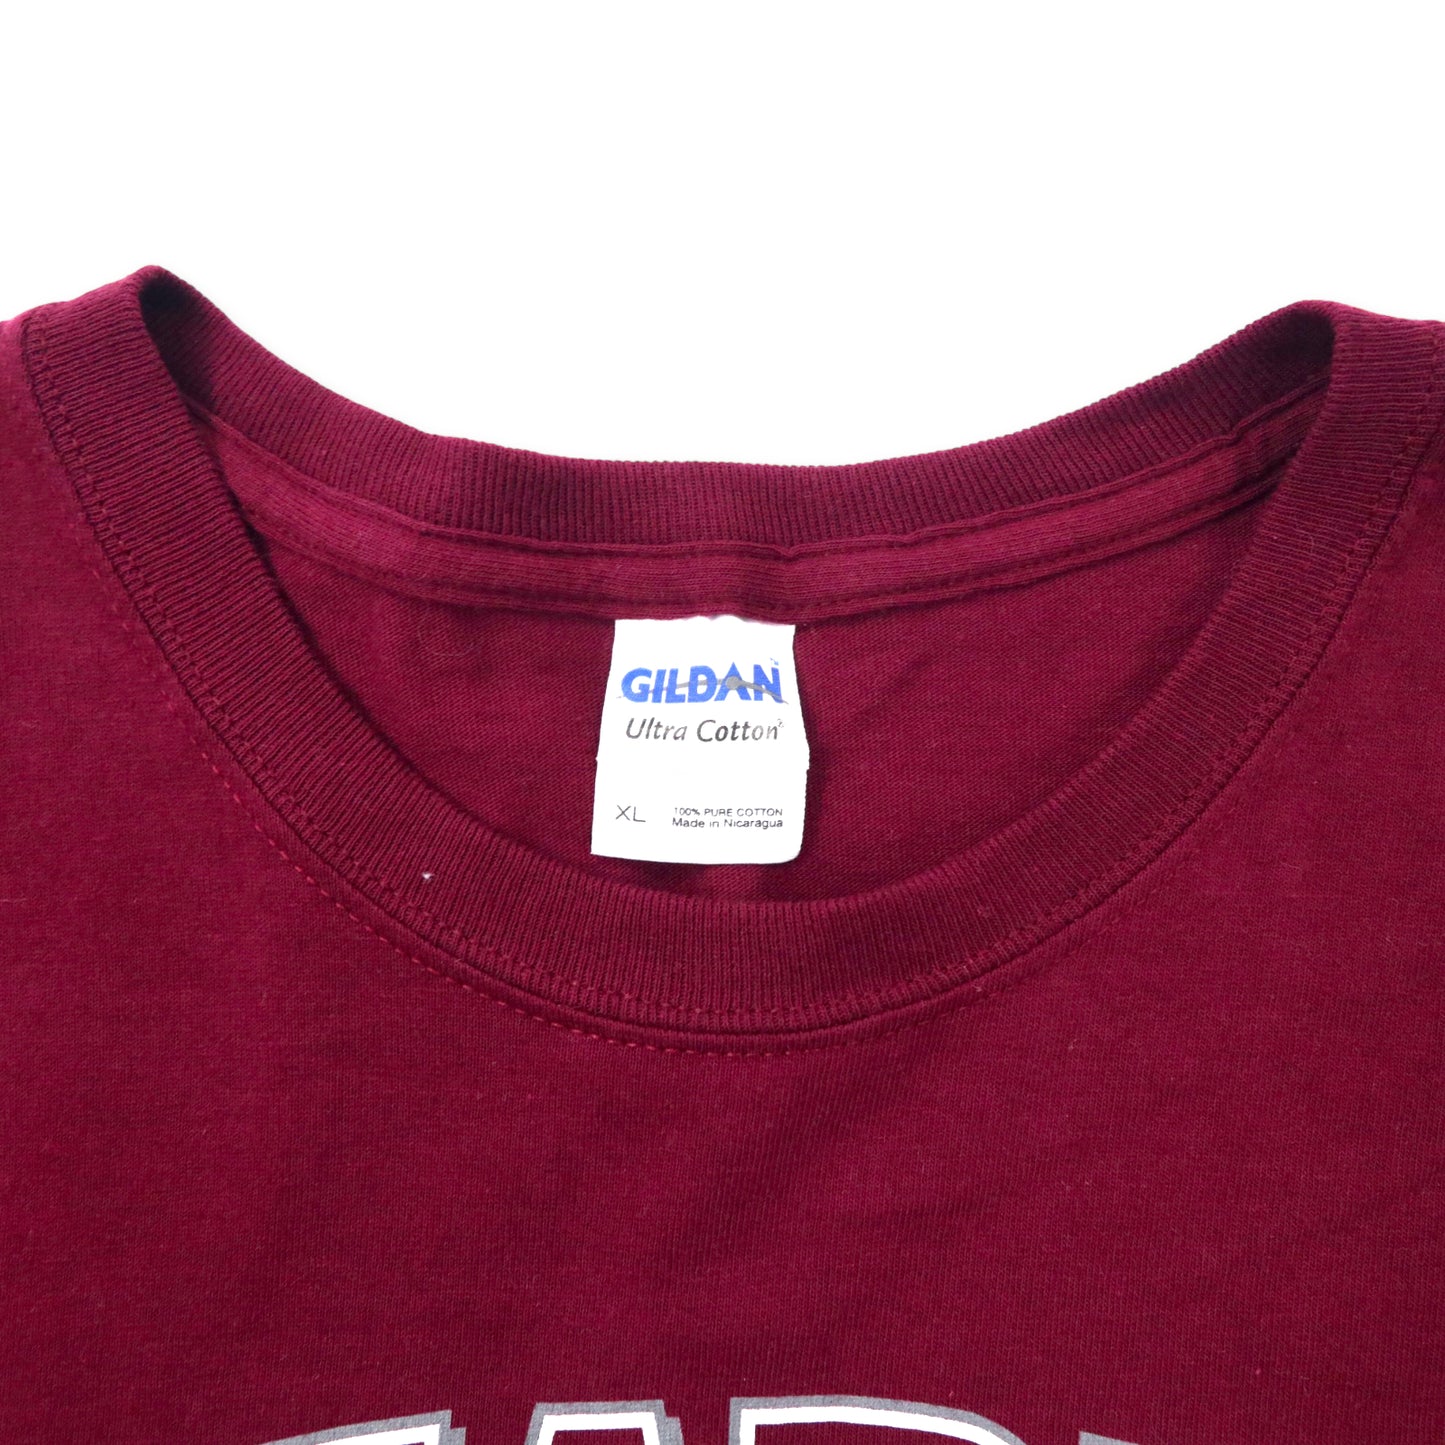 GILDAN カレッジプリントTシャツ XL パープル コットン KEARNY BASEBALL ビッグサイズ